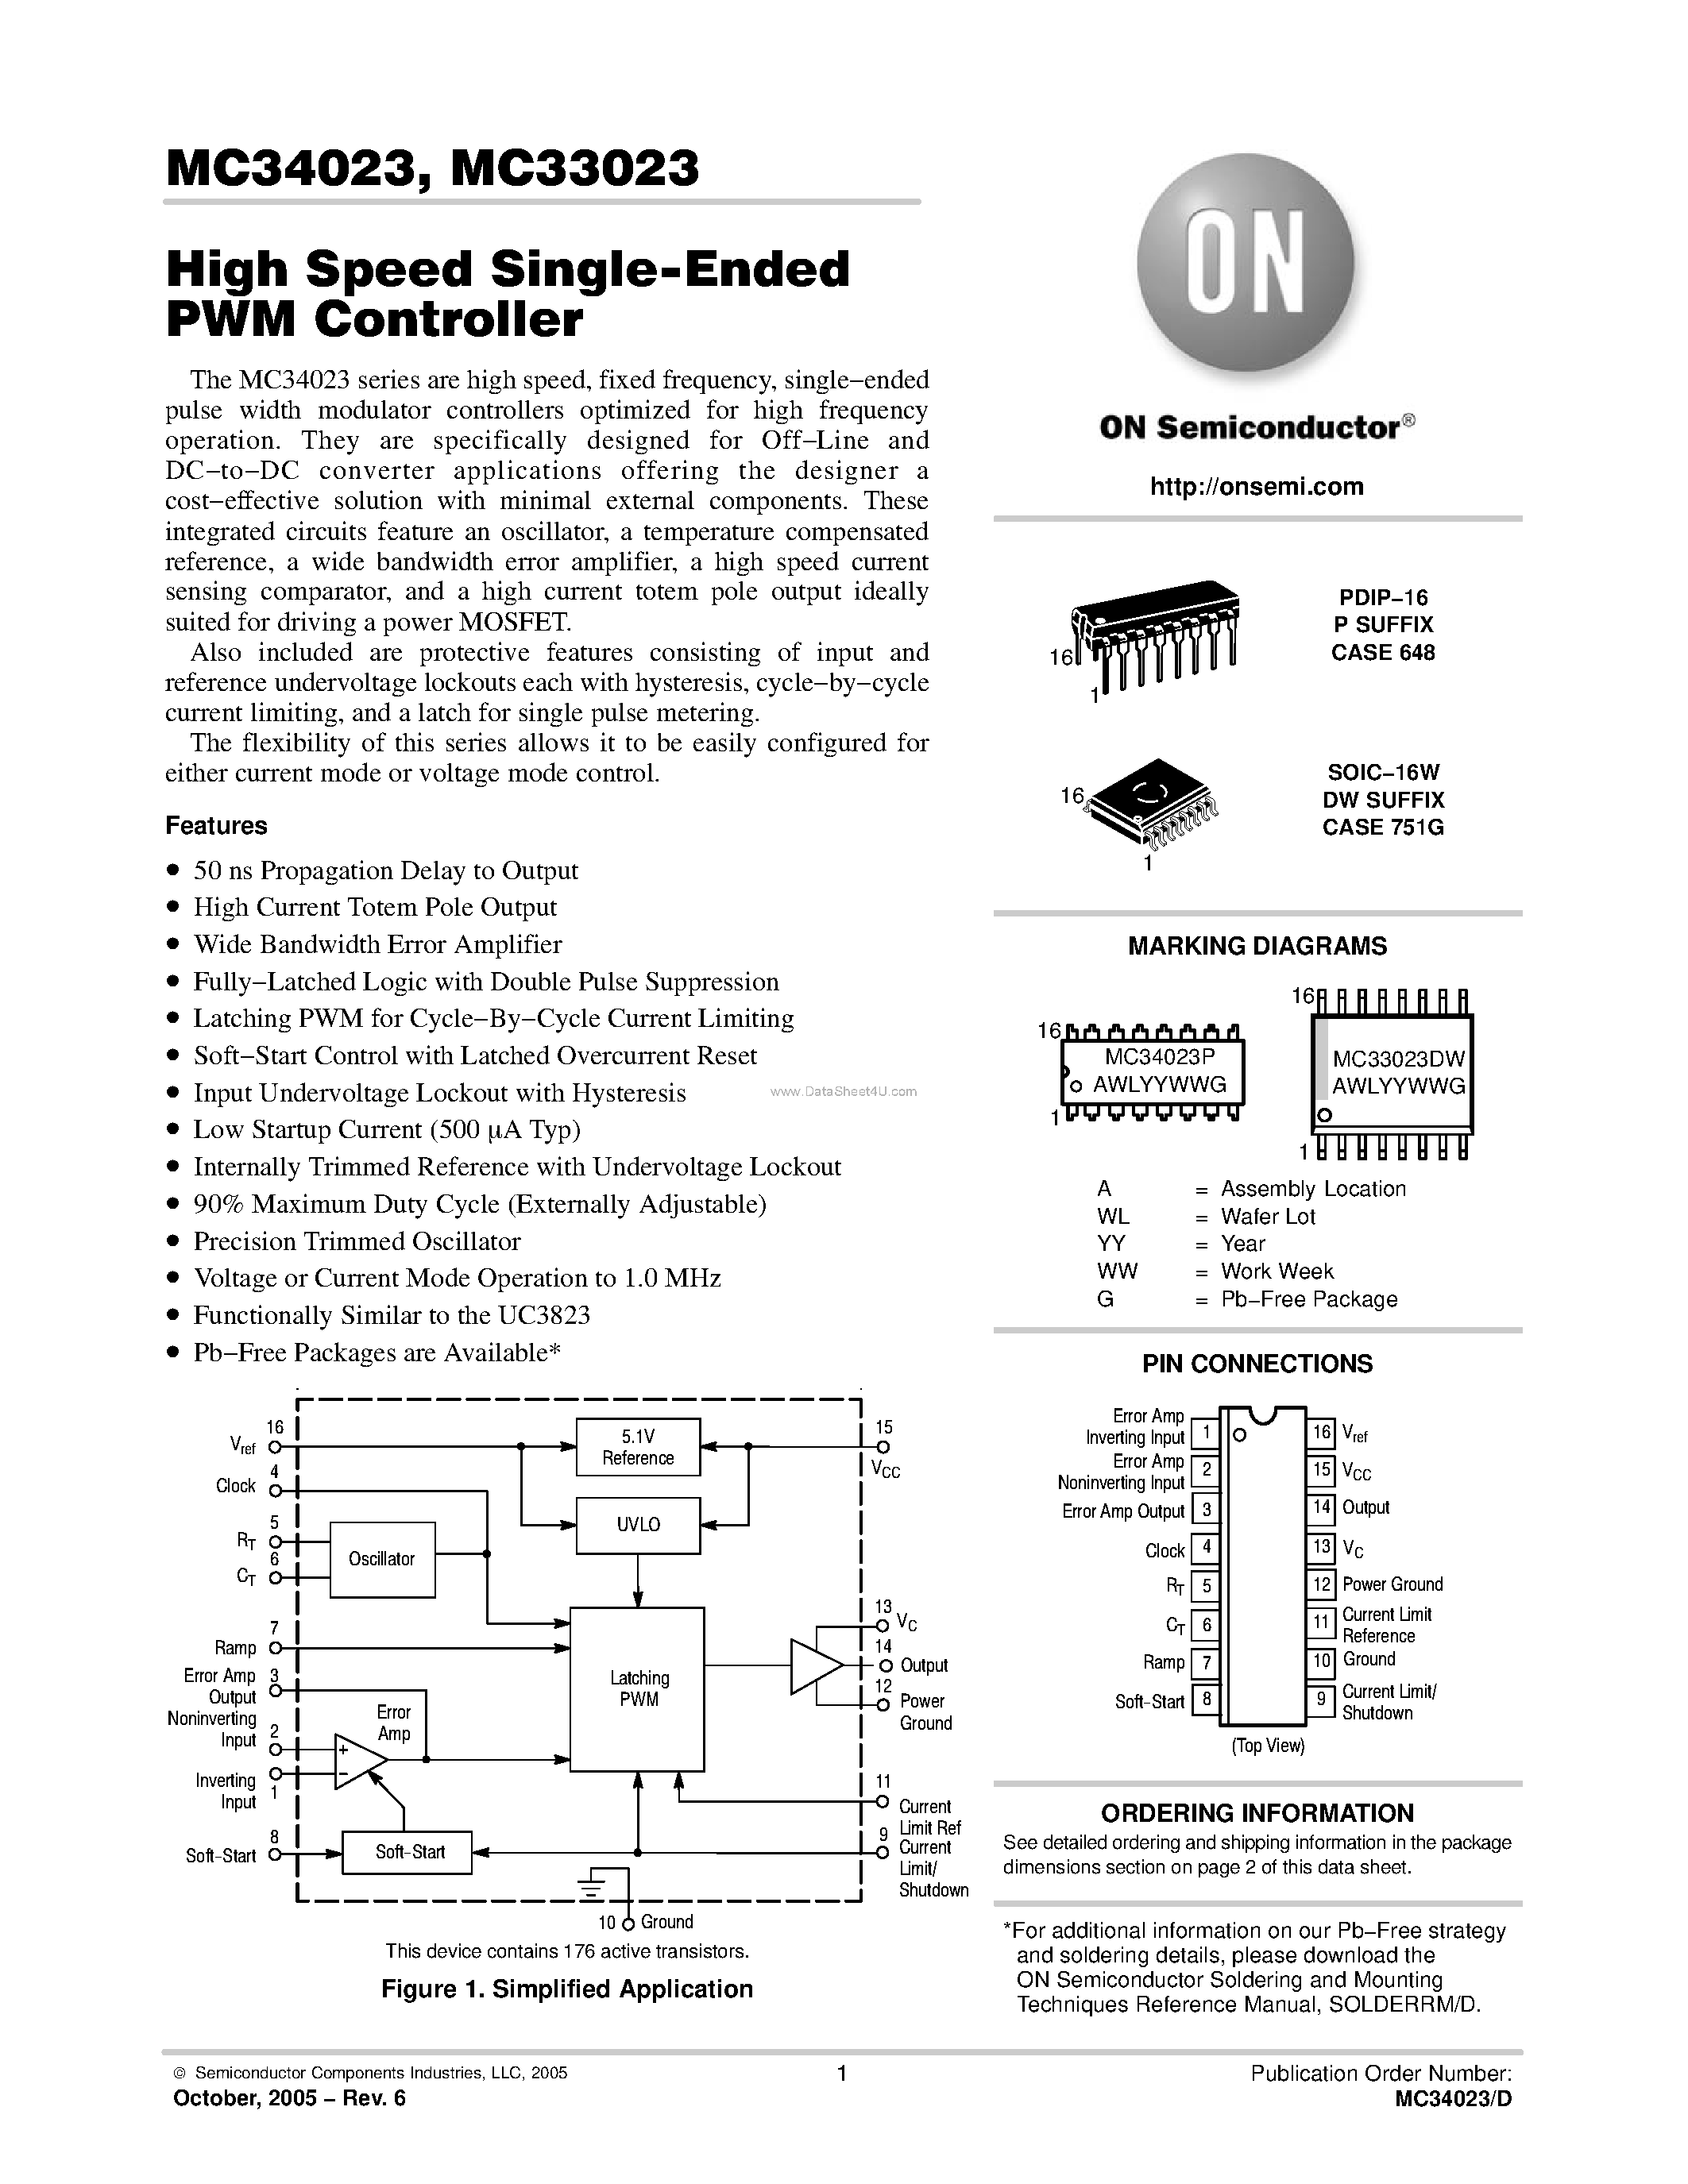 Datasheet MC33023 - (MC33023 / MC34023) High Speed Single-Ended PWM Controller page 1